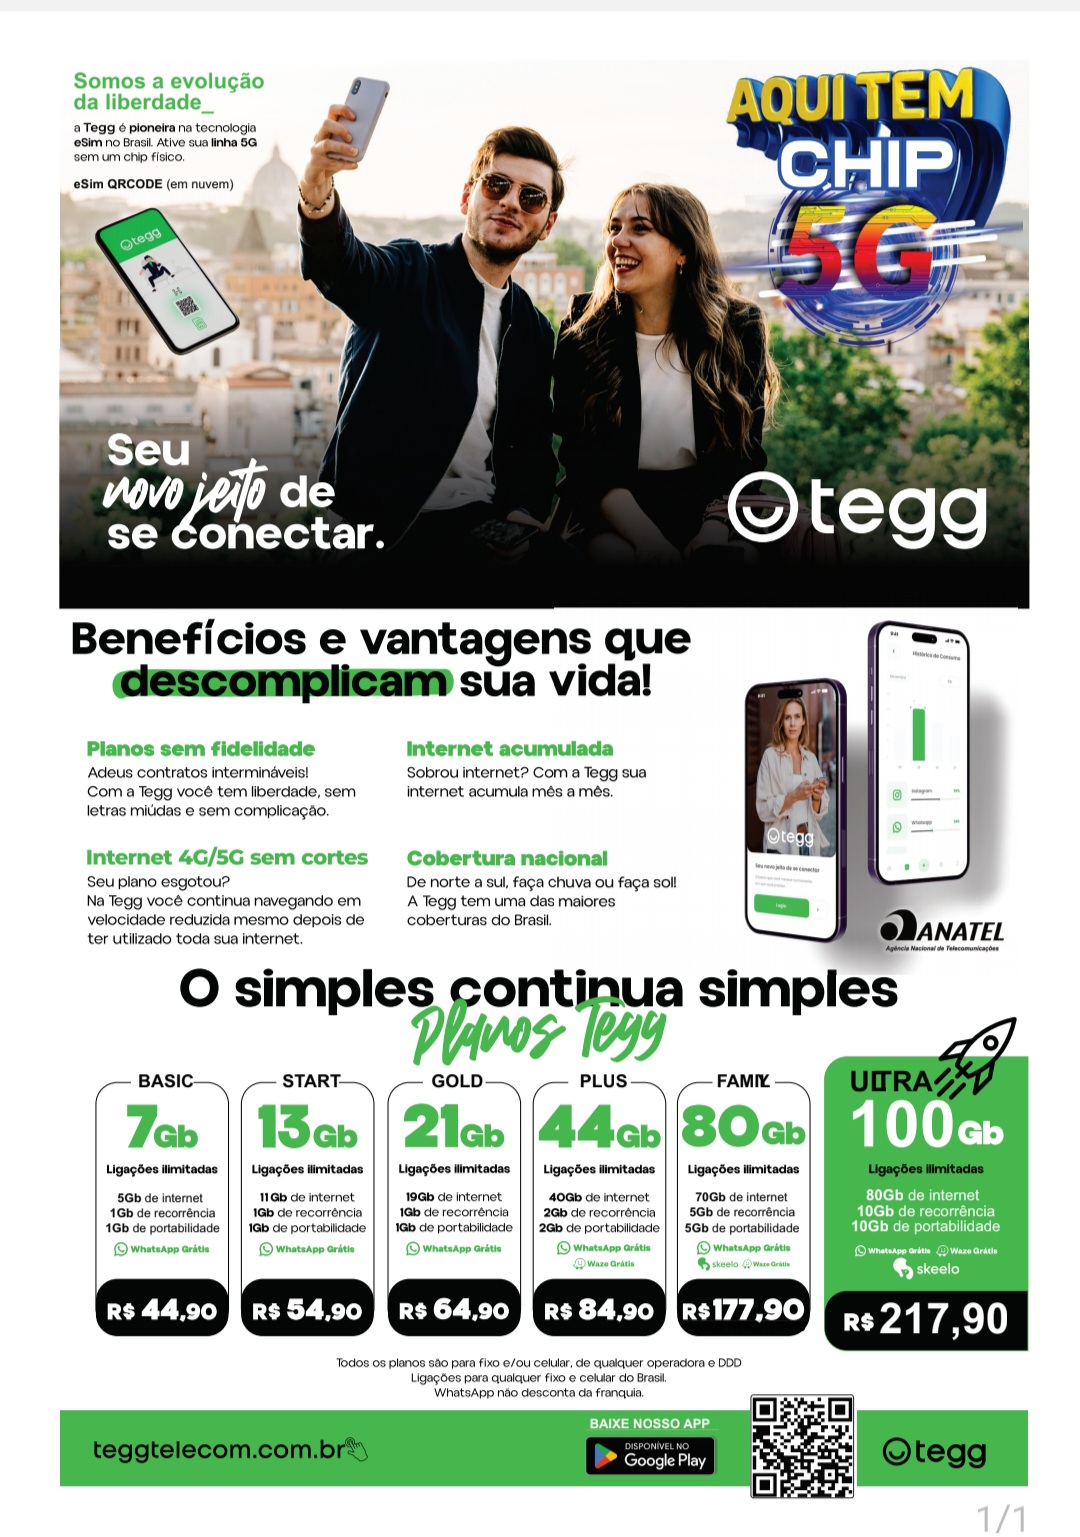 Tegg Startup Mobilitec 5G  aaa